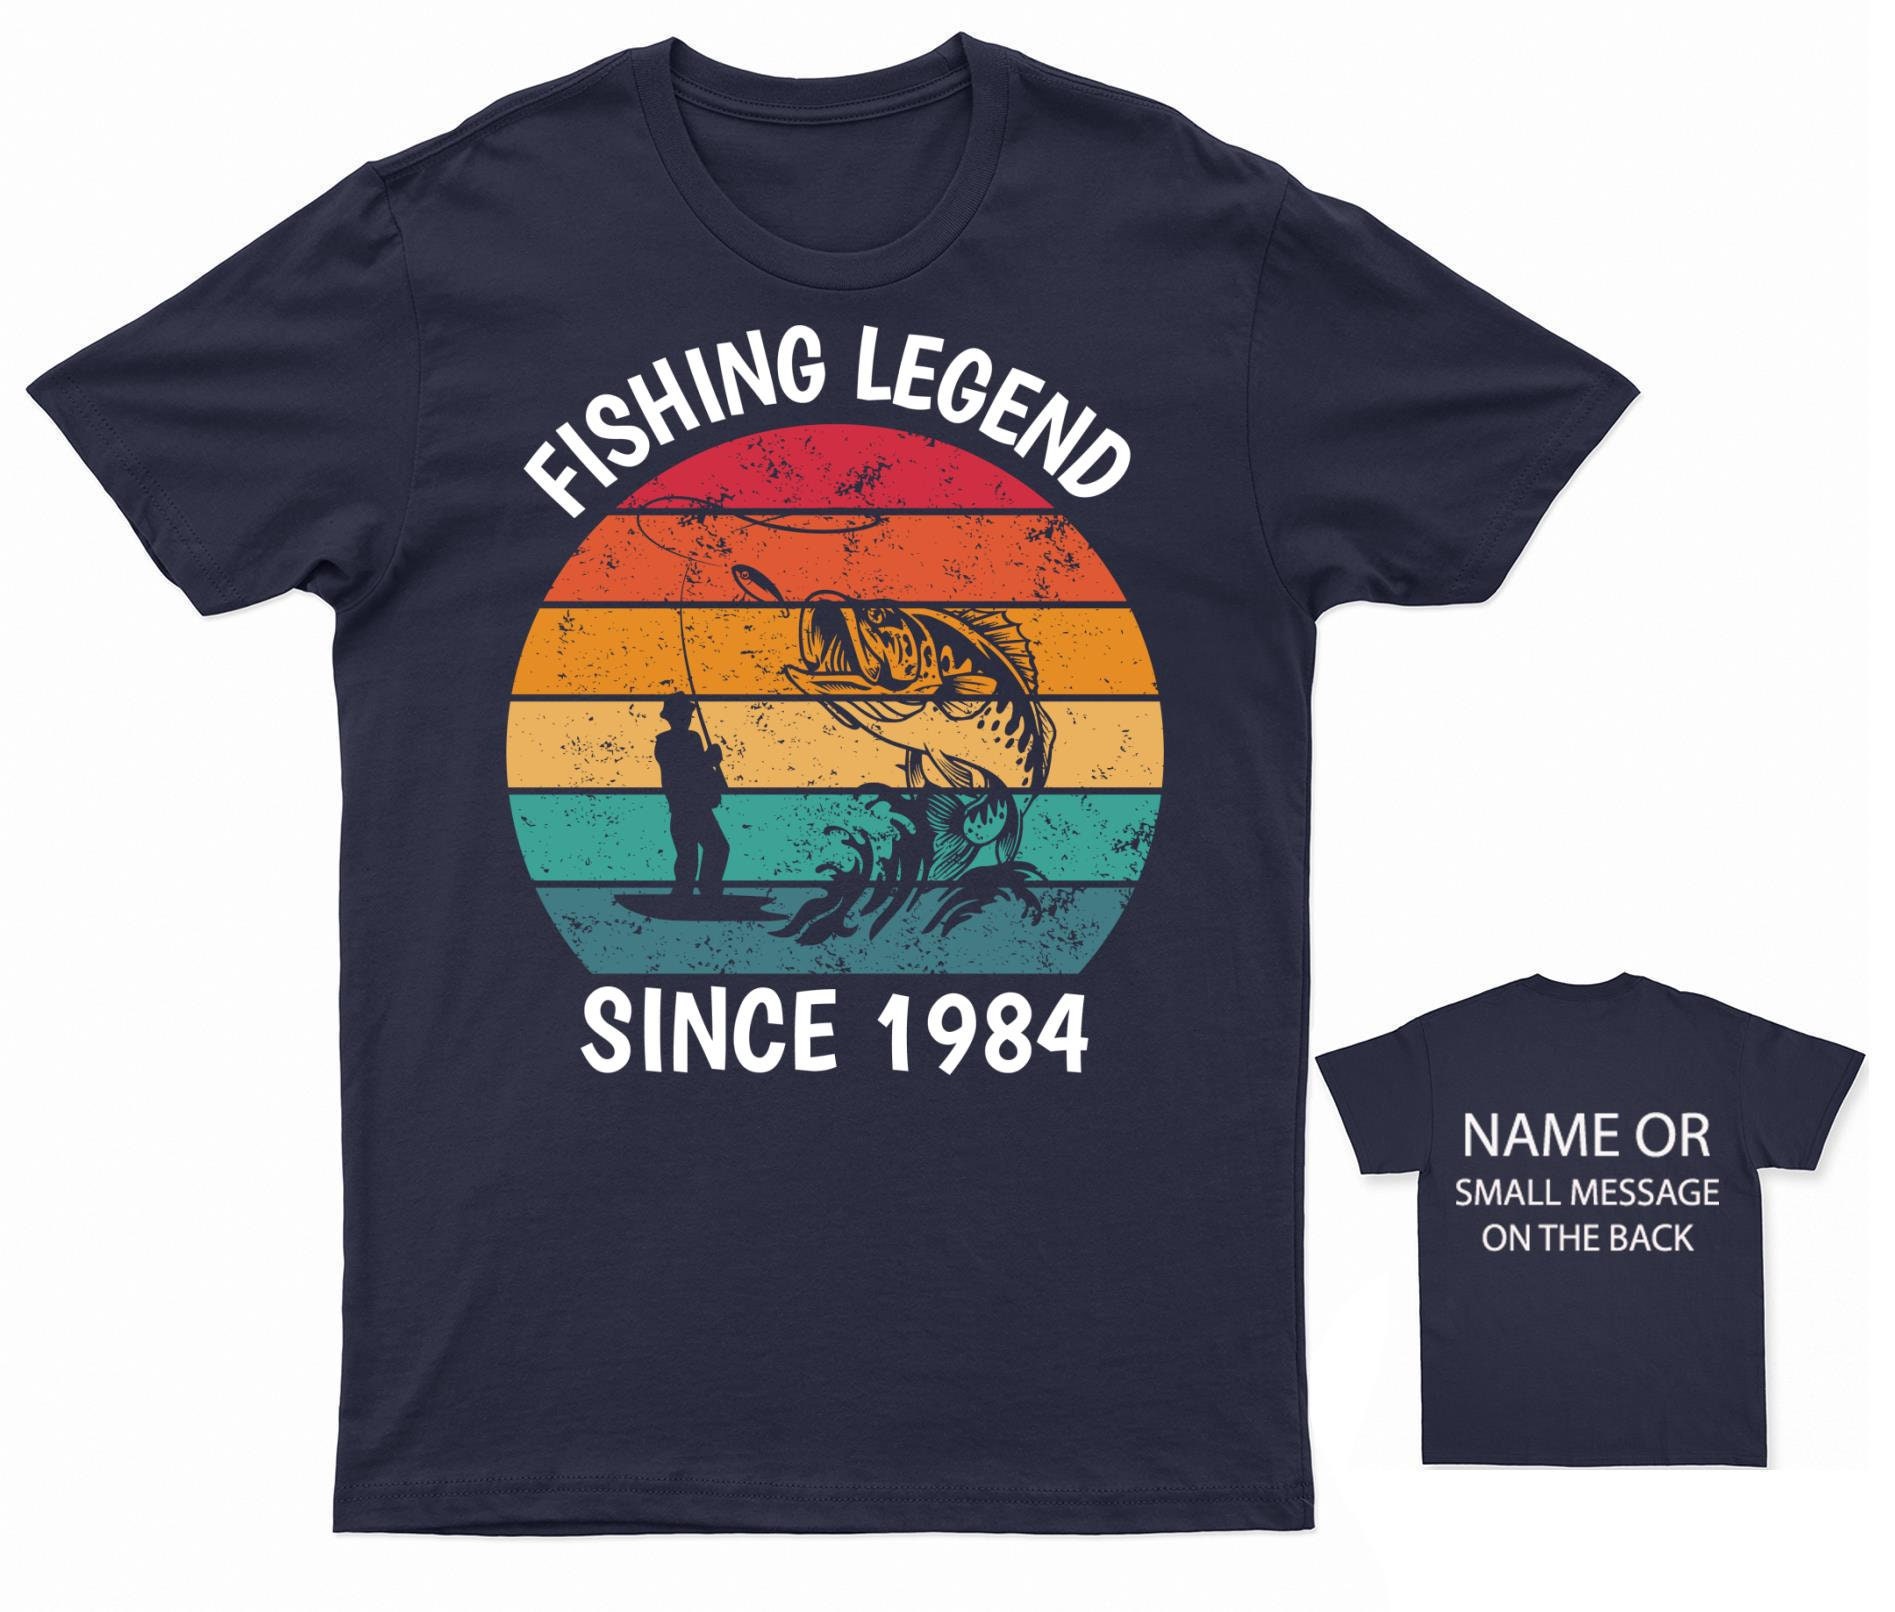 Reel Legends, Shirts, Reel Legends Royal Blue Fishing Shirt Size Xl